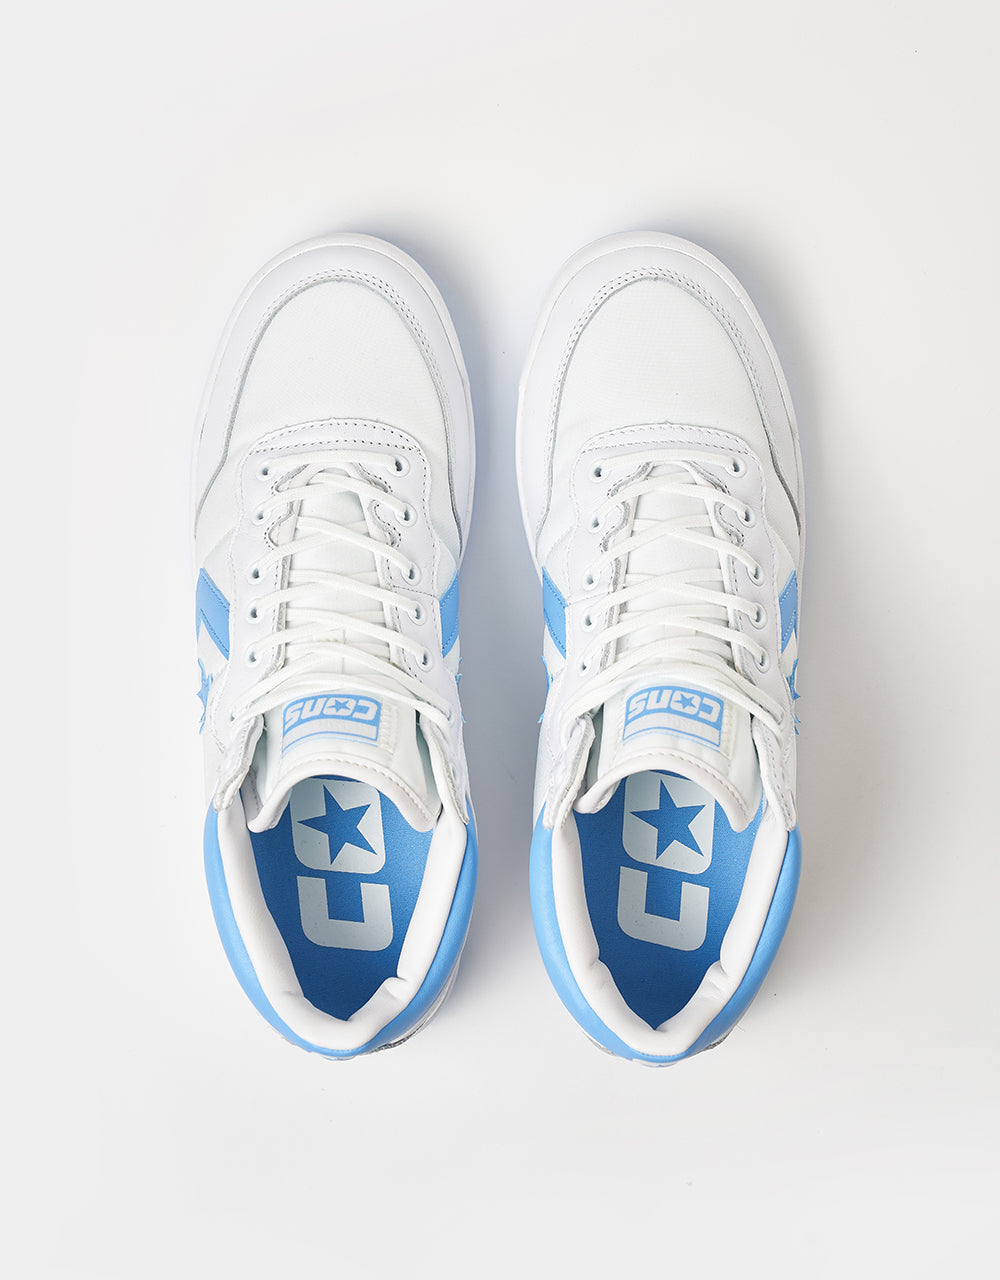 Converse Fastbreak Pro Skate Shoes - White/Lt. Blue/White